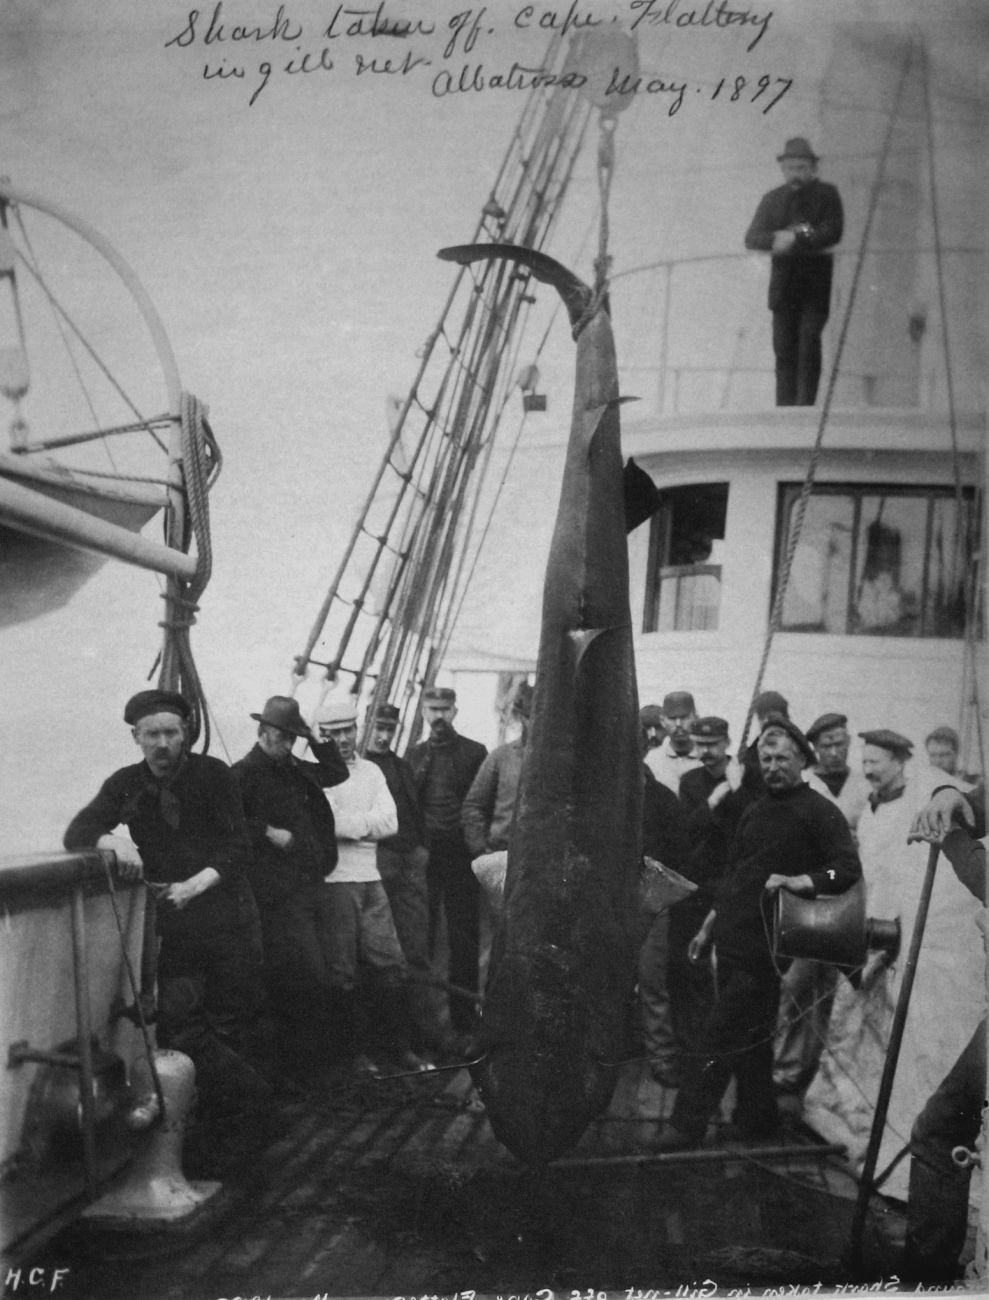 Shark taken off Cape Flattery in gill net, Albatross, 1897